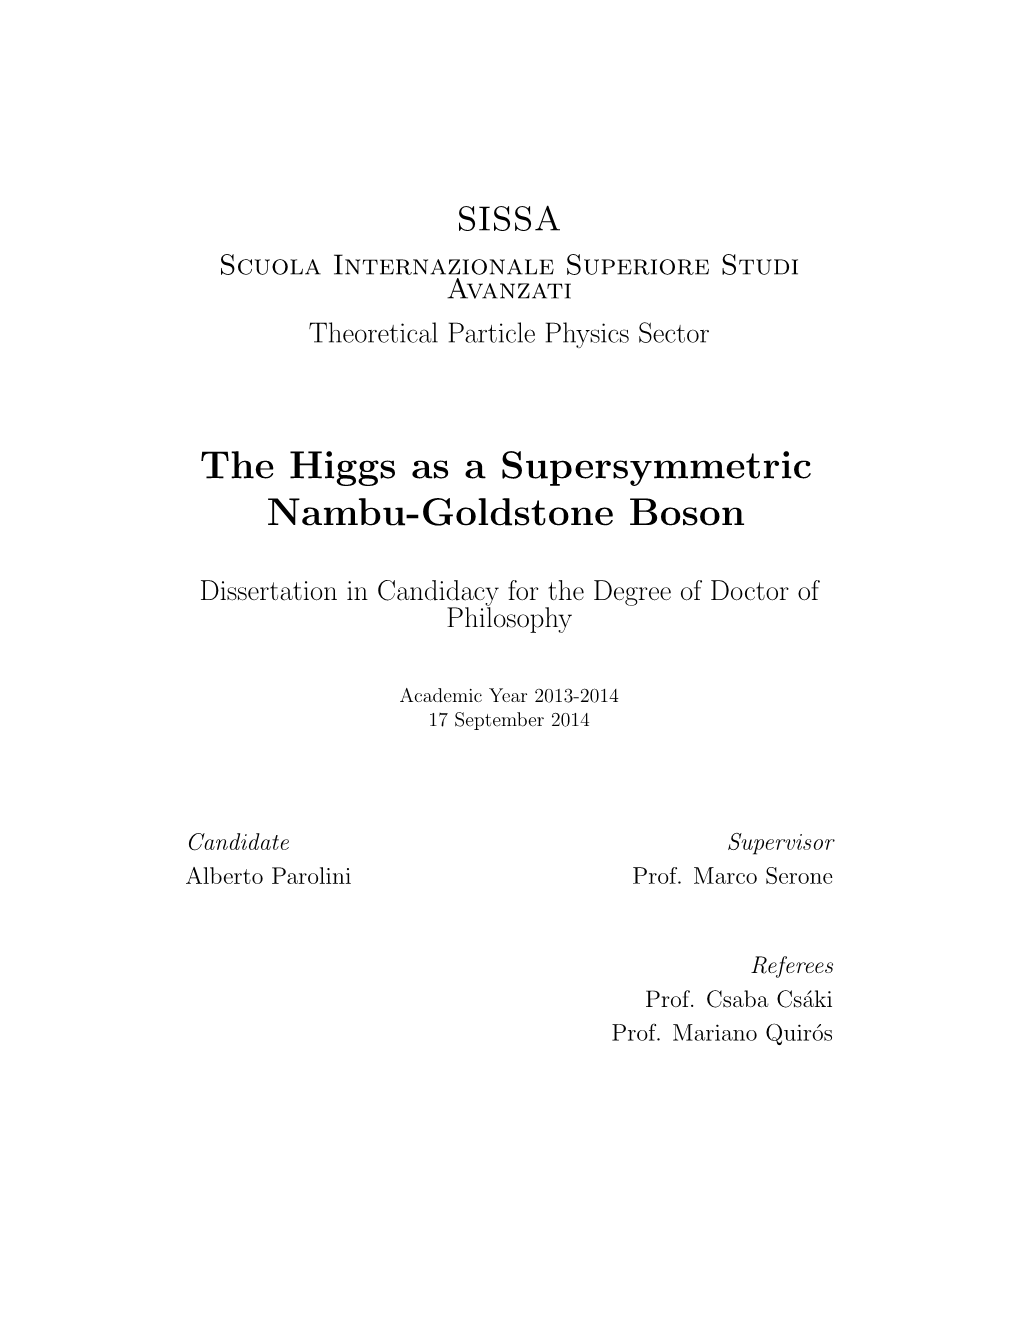 The Higgs As a Supersymmetric Nambu-Goldstone Boson